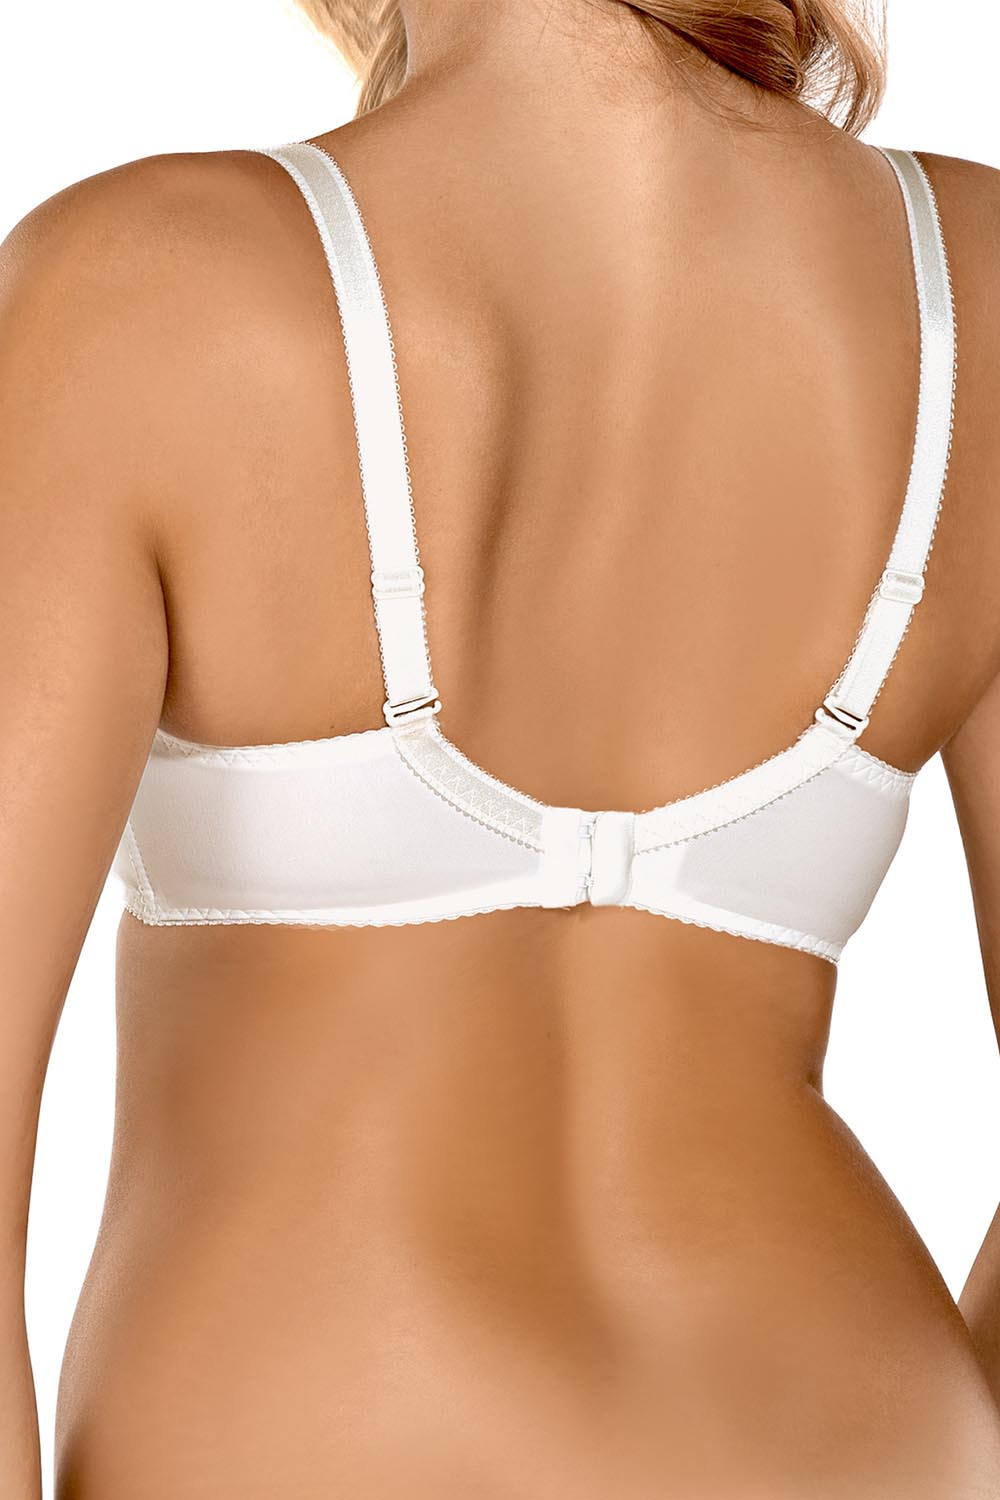 Nipplex Tamara Big underwired padded bra adjustable straps embroidery smooth 